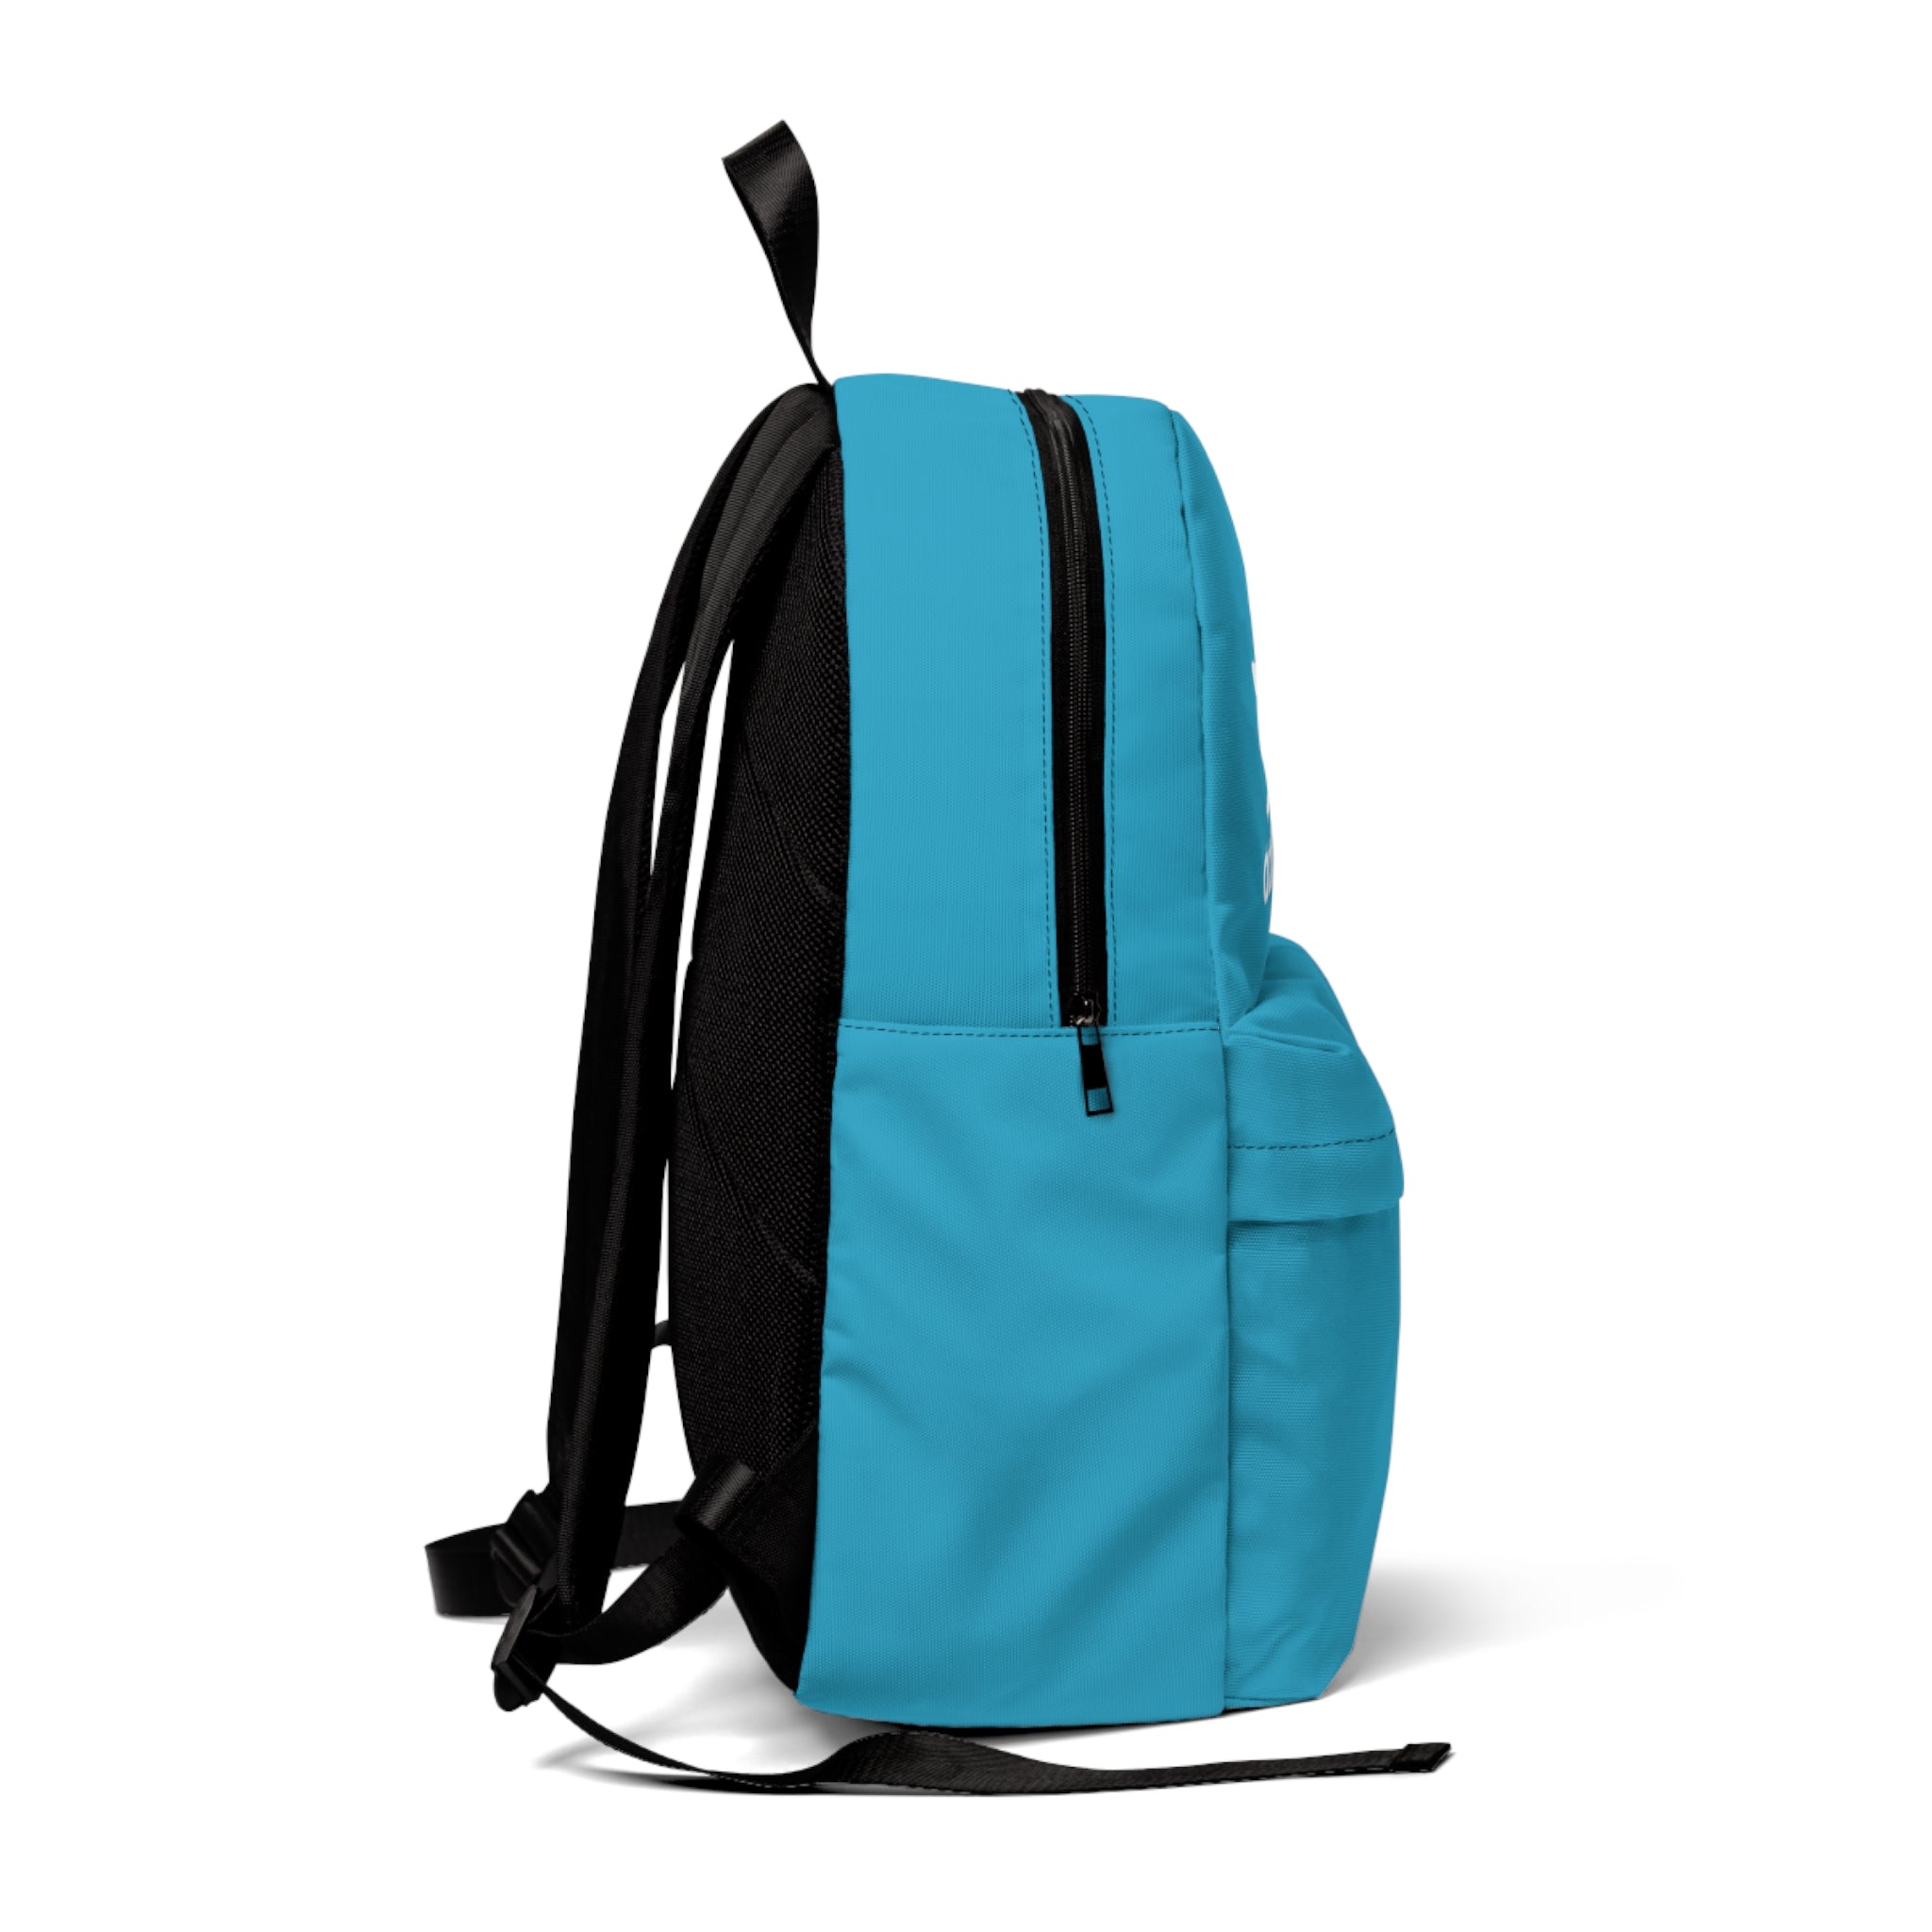 Adislav -  Classic Backpack